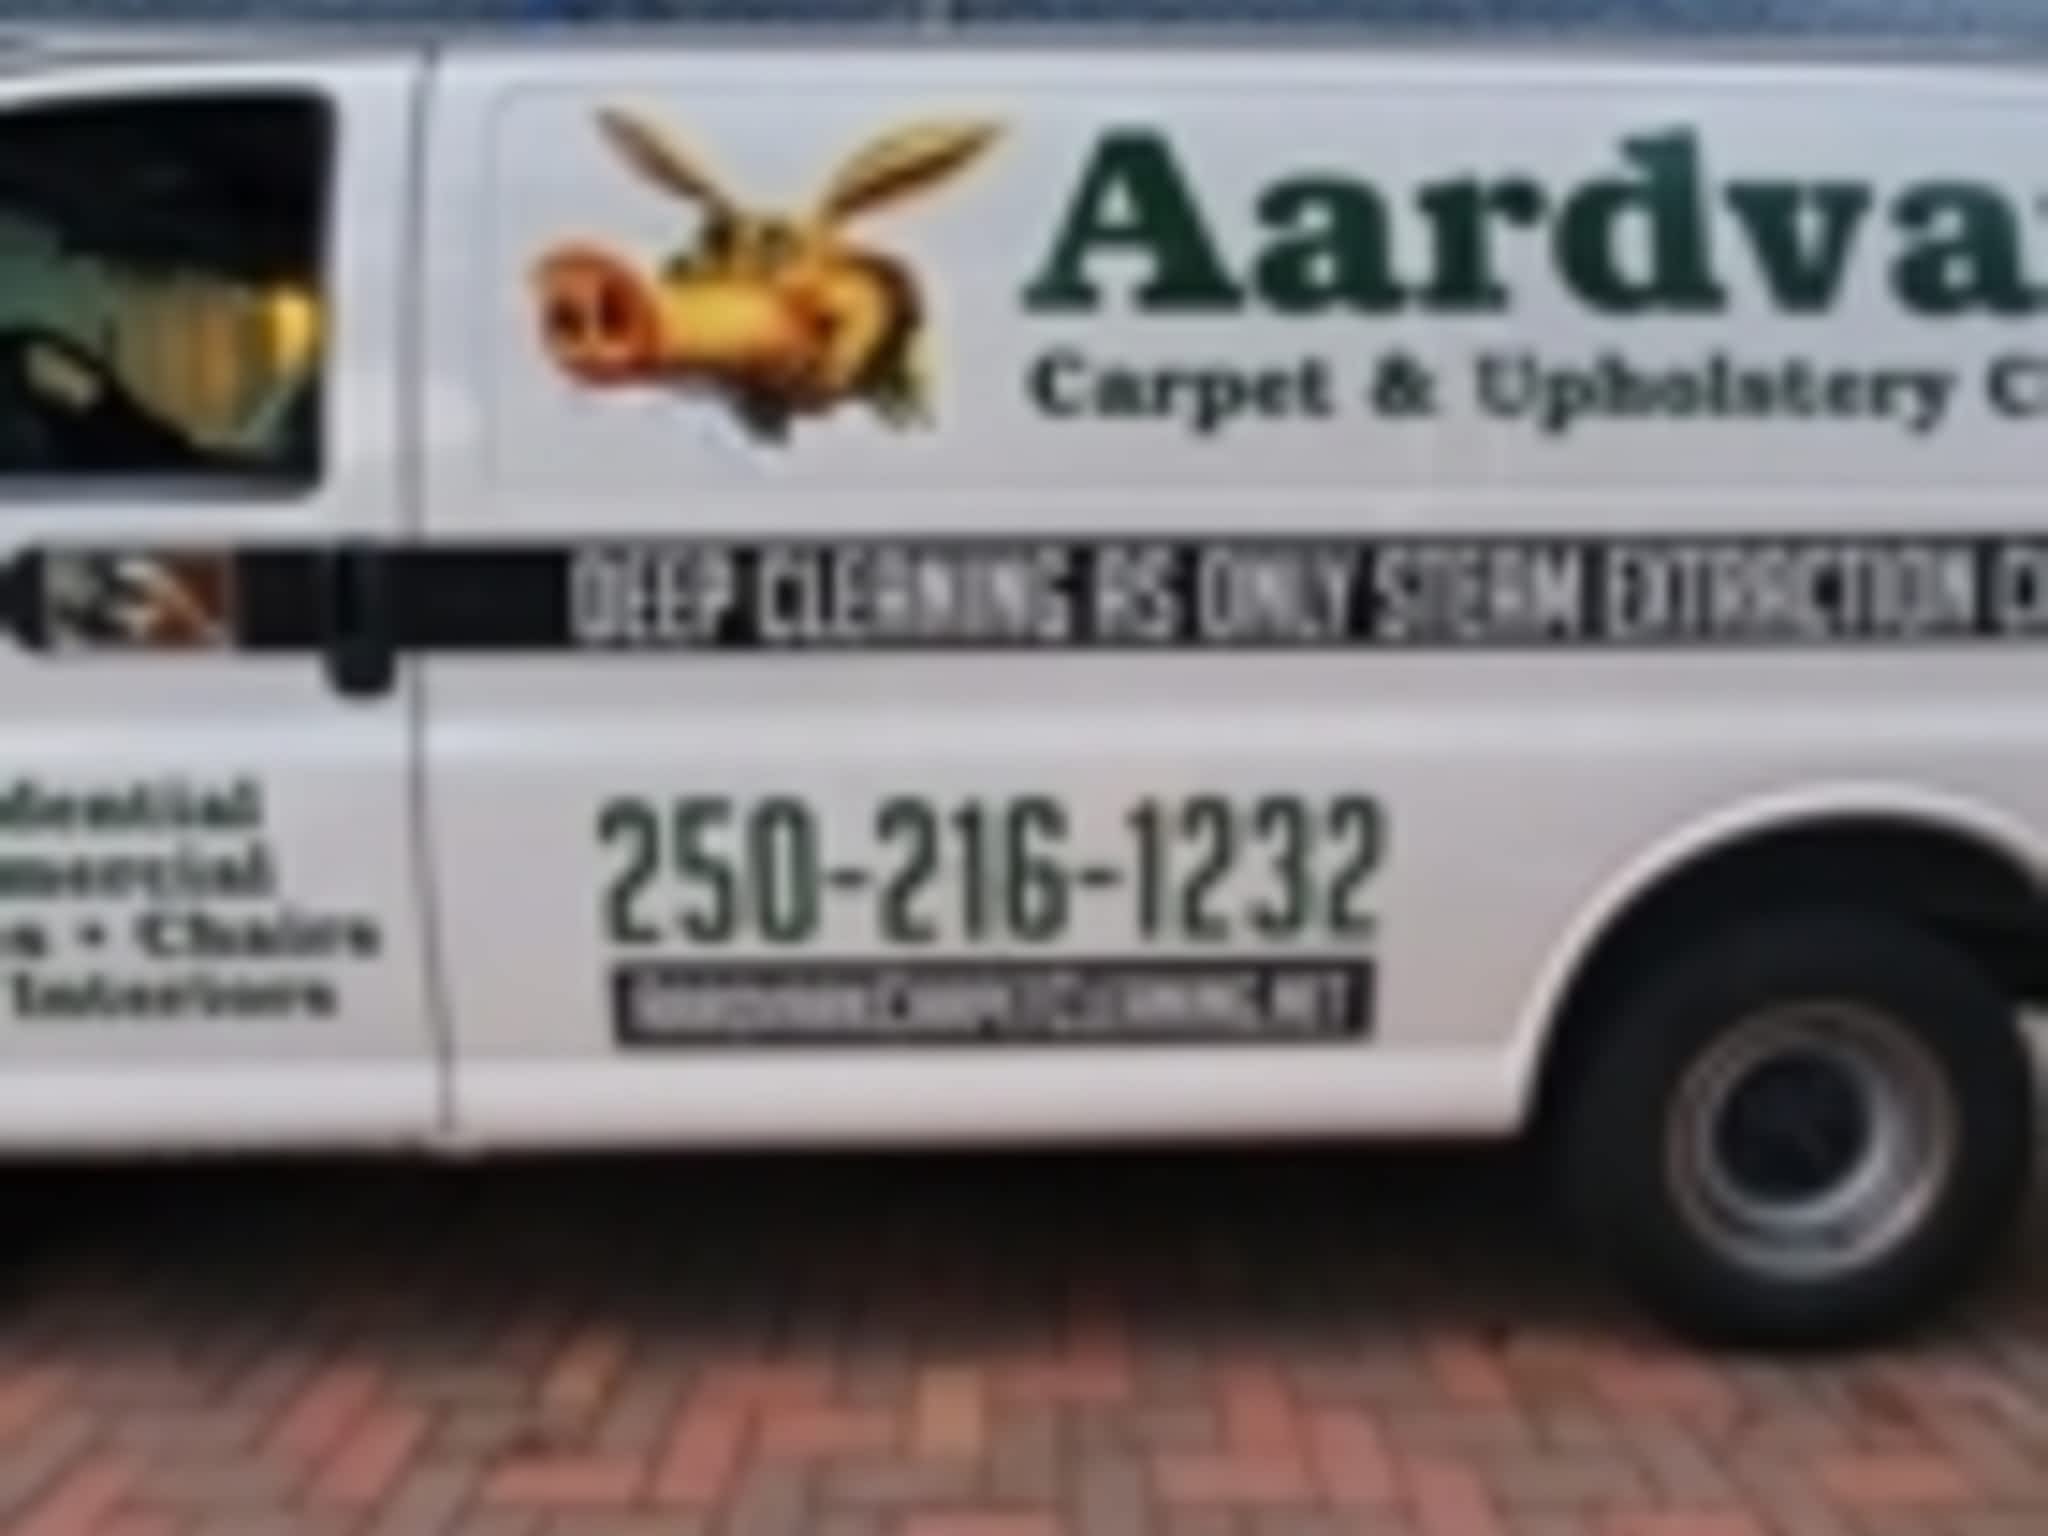 photo Aardvark Carpet & Upholstery Cleaning